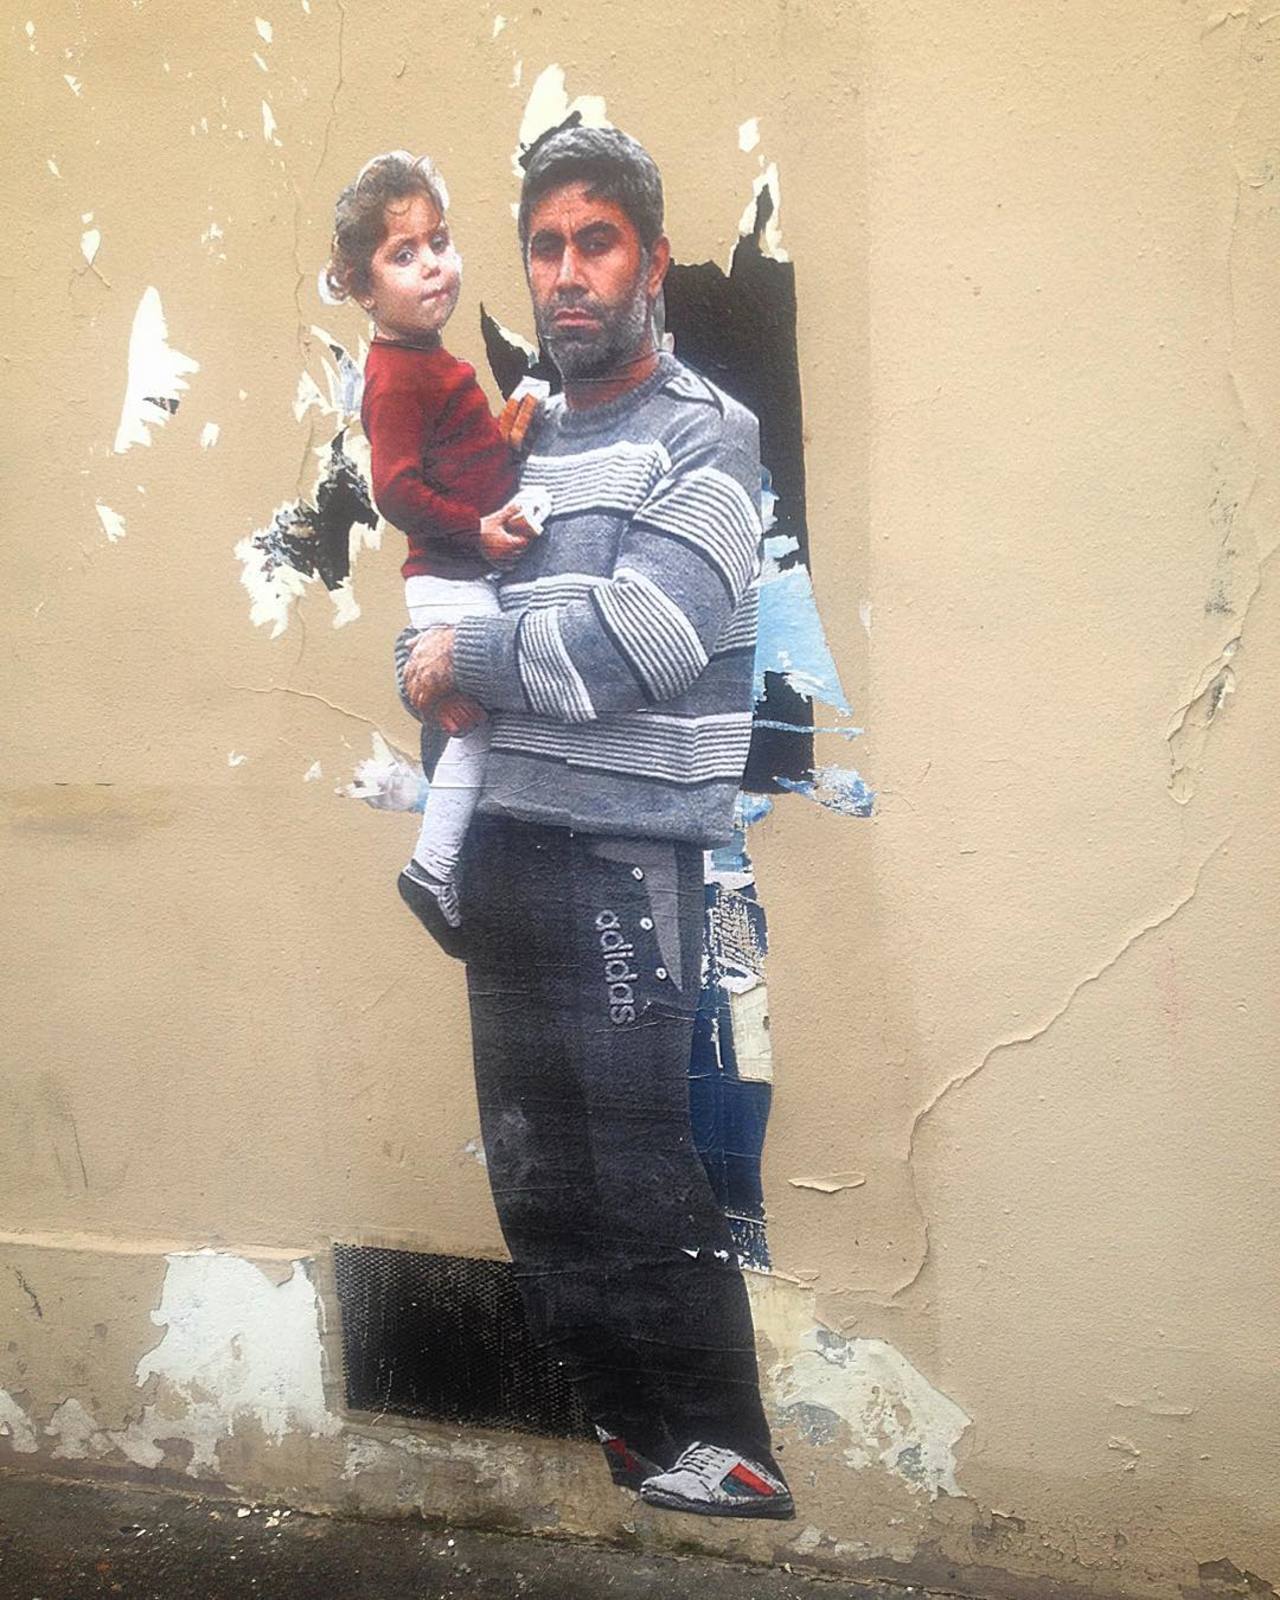 #Paris #graffiti photo by @mh2p_ http://ift.tt/1PxWLKw #StreetArt http://t.co/RG9oz3Rqu3